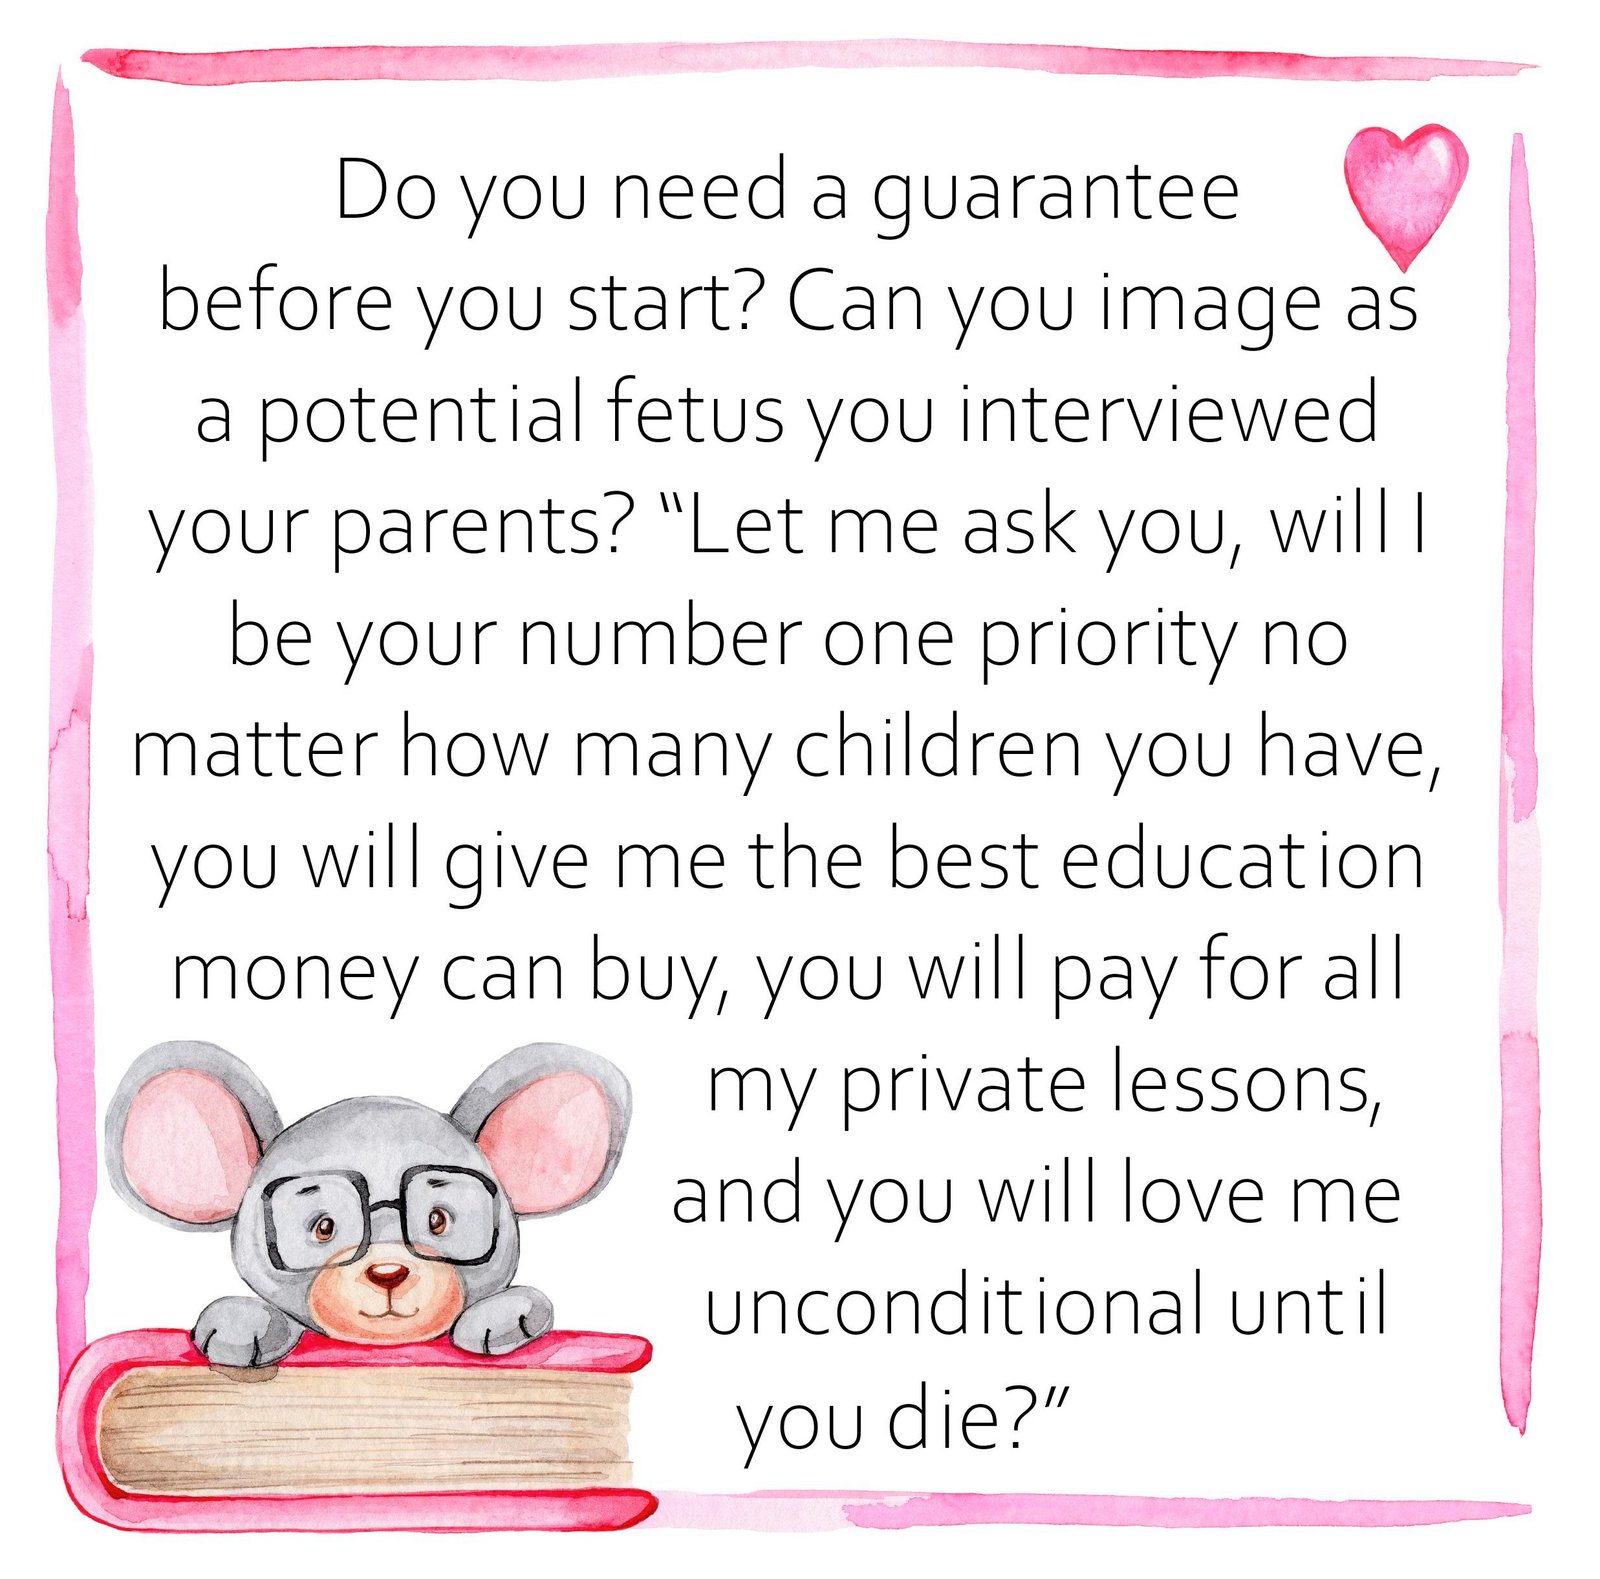 Do you need a guarantee before you start